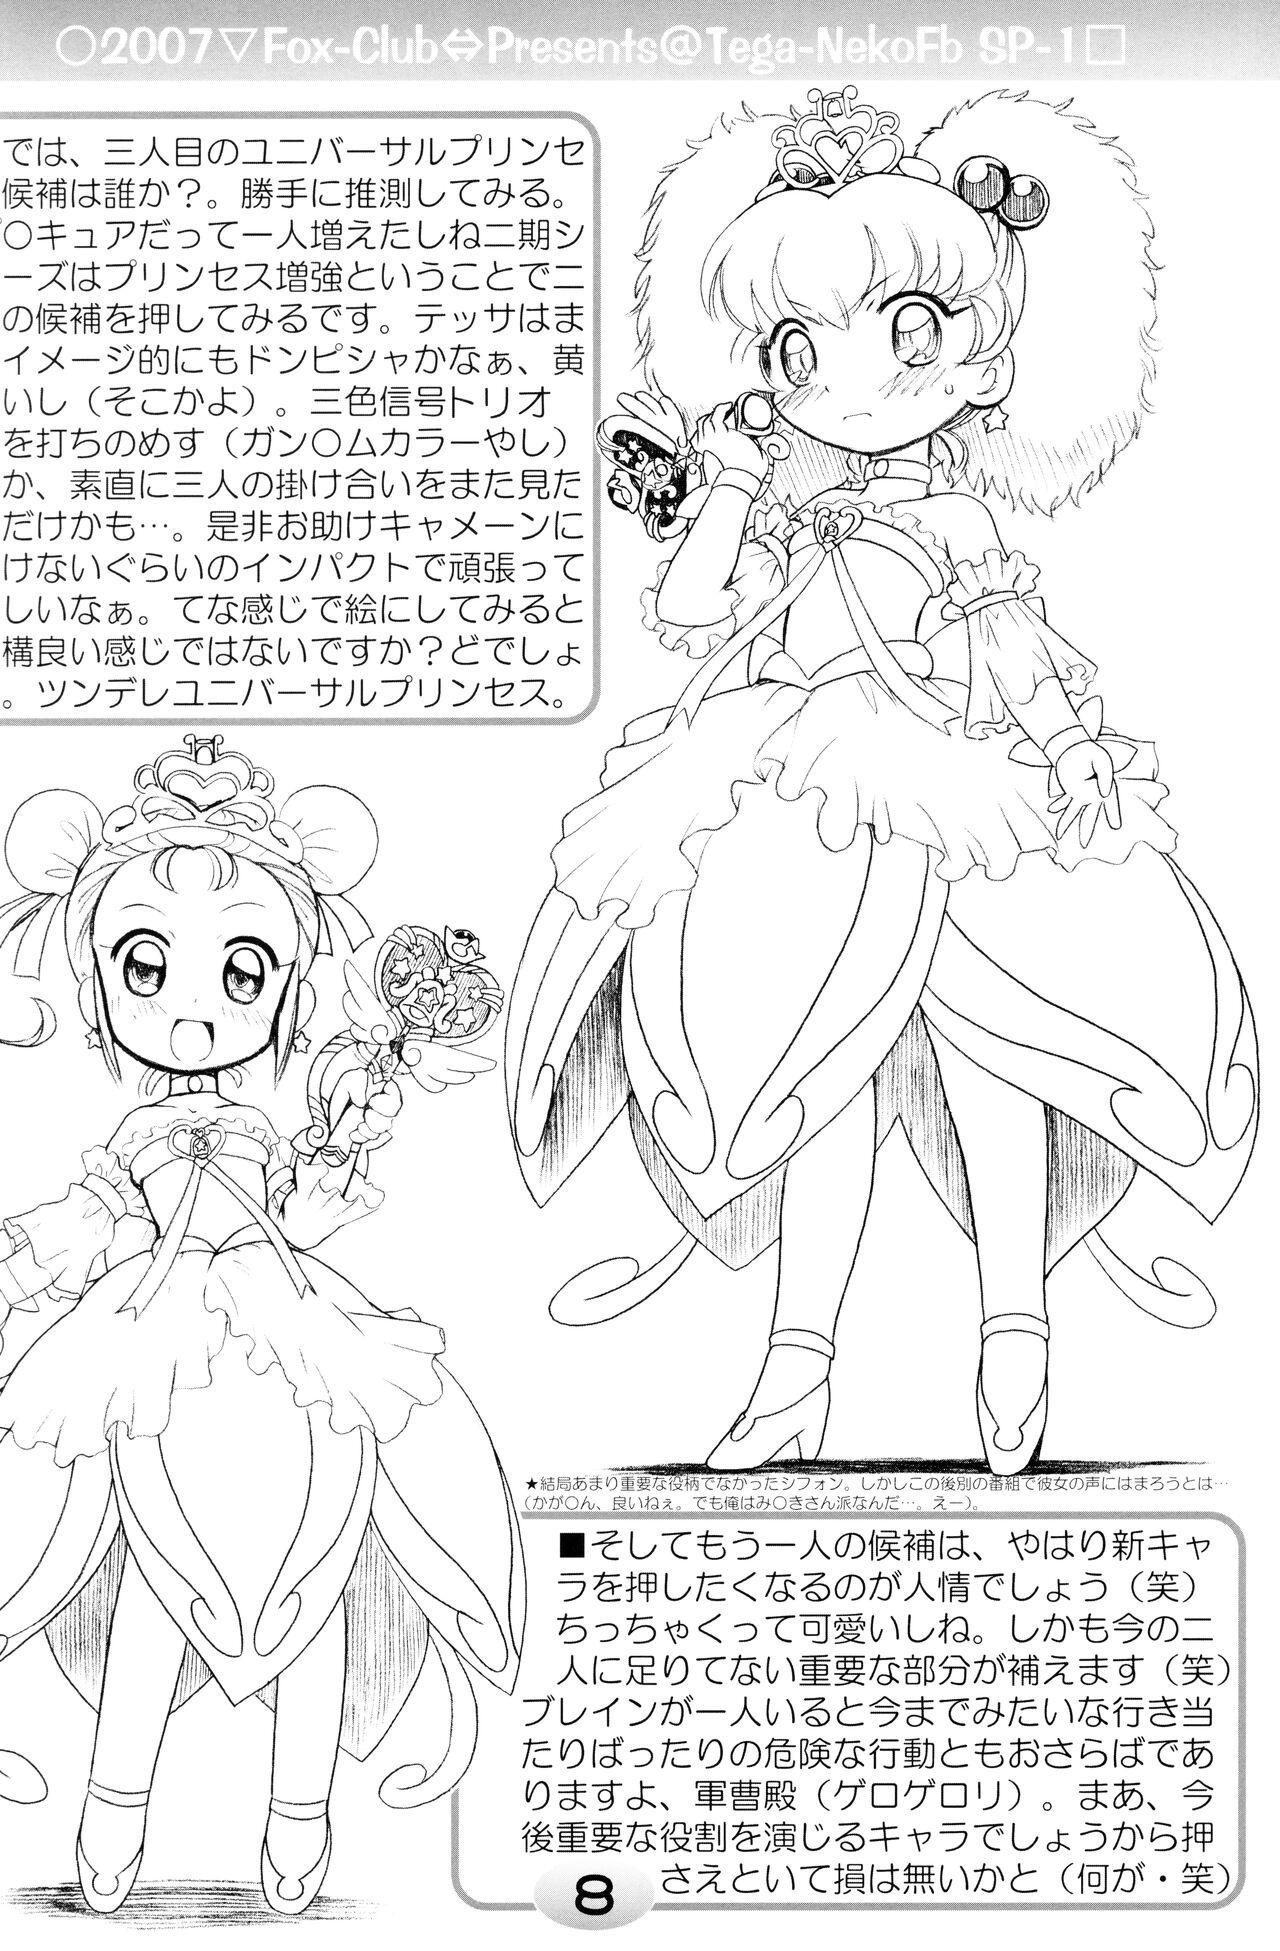 Blowing TeGa-NeKo Fb/SP Futago Hime Plus - Fushigiboshi no futagohime | twin princesses of the wonder planet Chat - Page 6